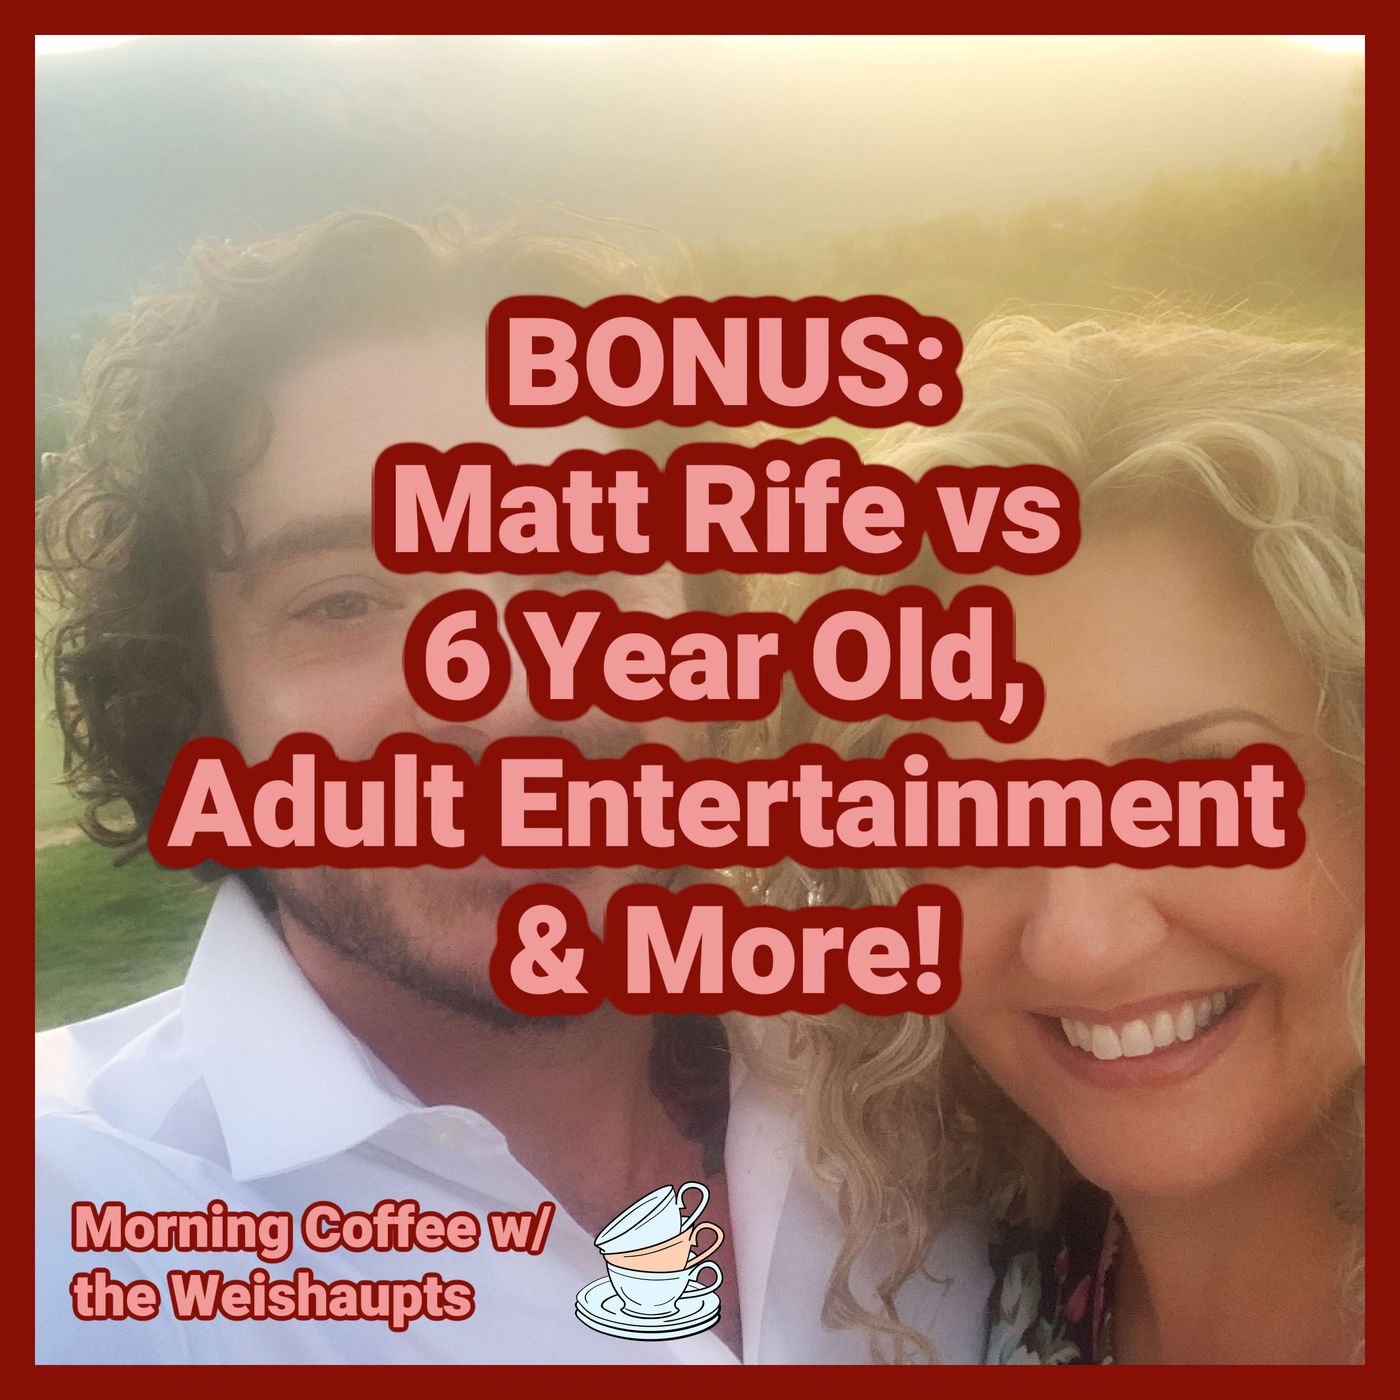 BONUS: Matt Rife vs 6 Year Old, Adult Entertainment & More! Morning Coffee w/ the Weishaupts!